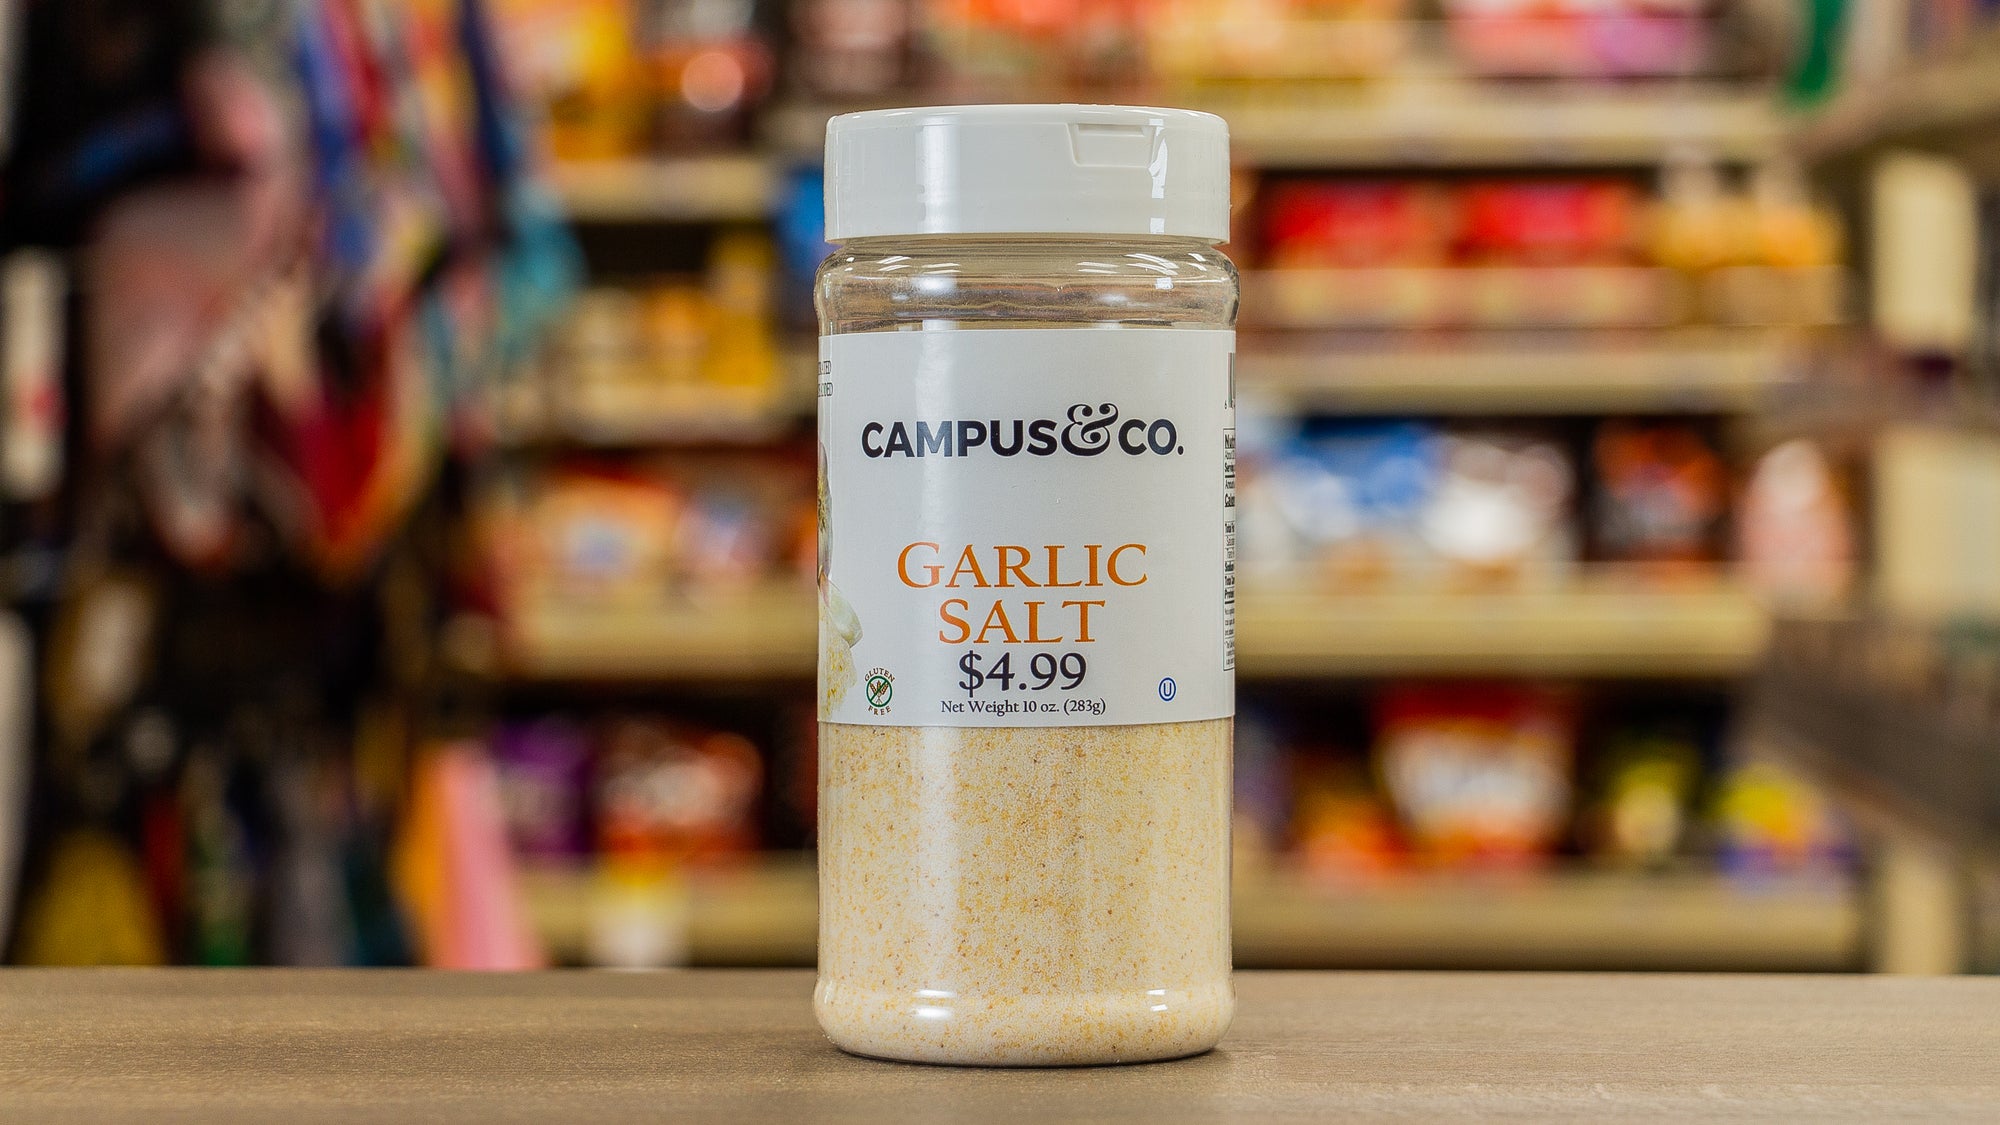 Campus&Co. Garlic Salt 10oz